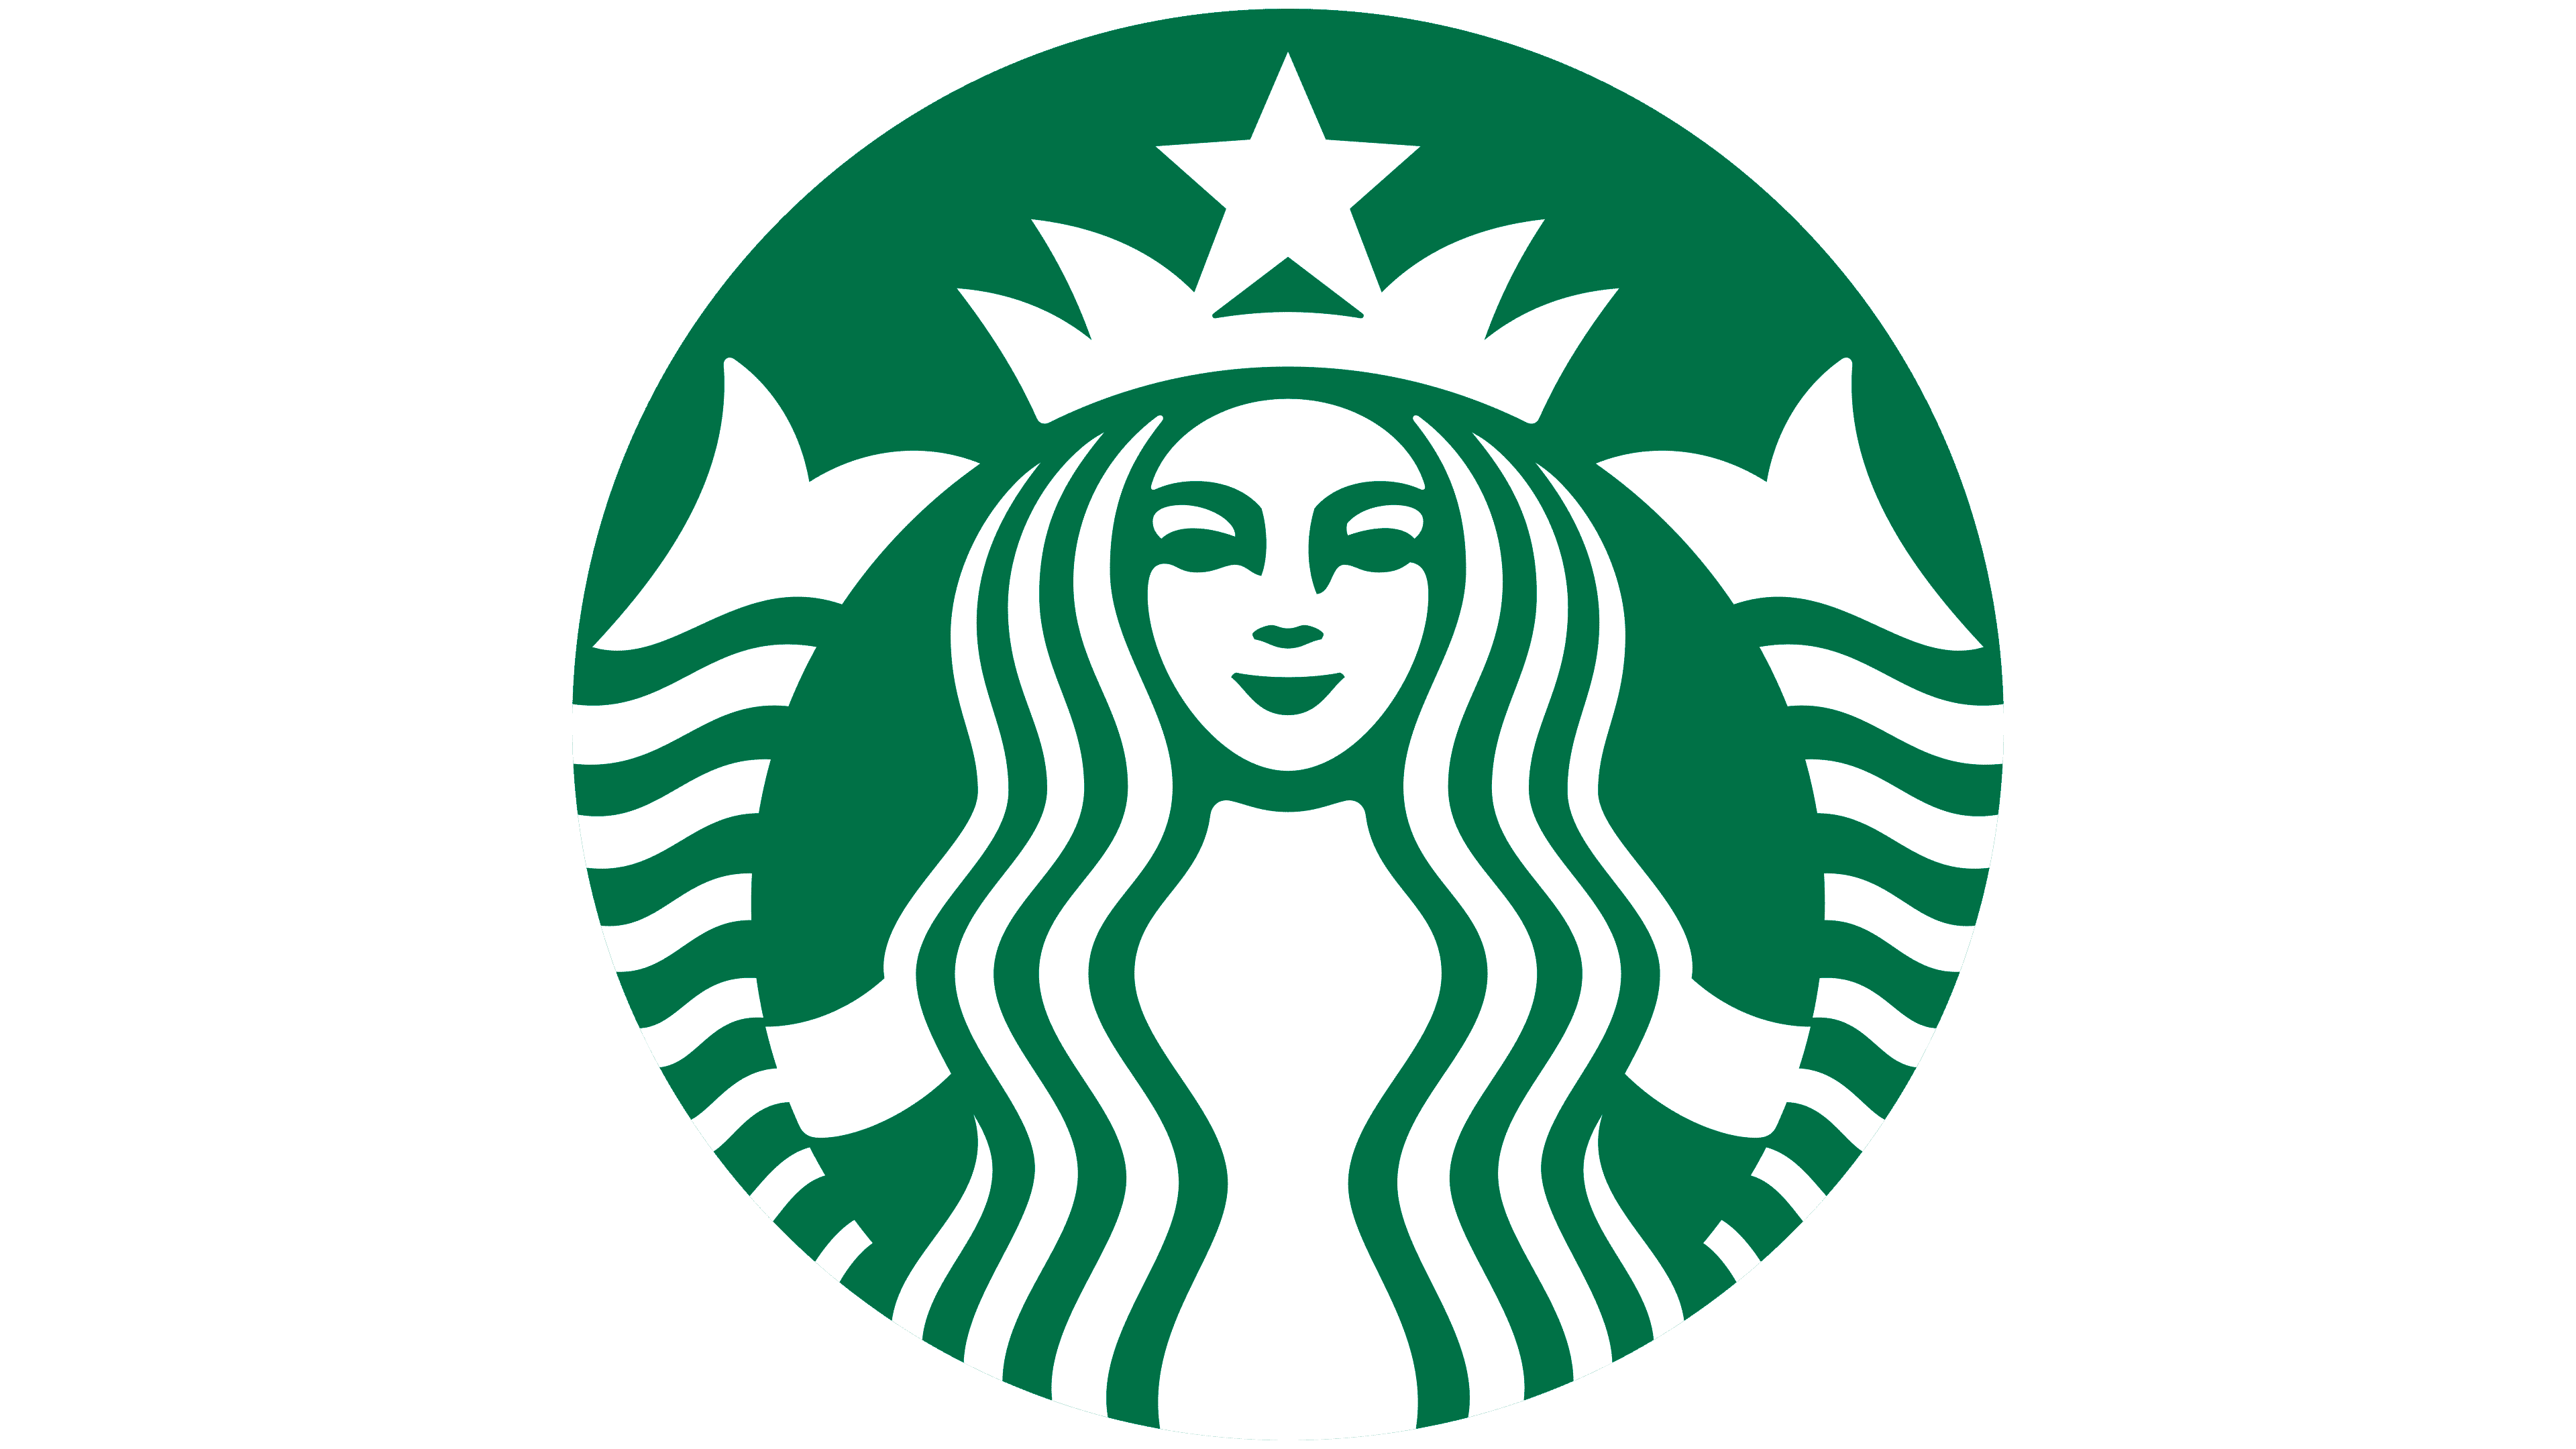 Starbucks logo download in SVG vector format or in PNG format